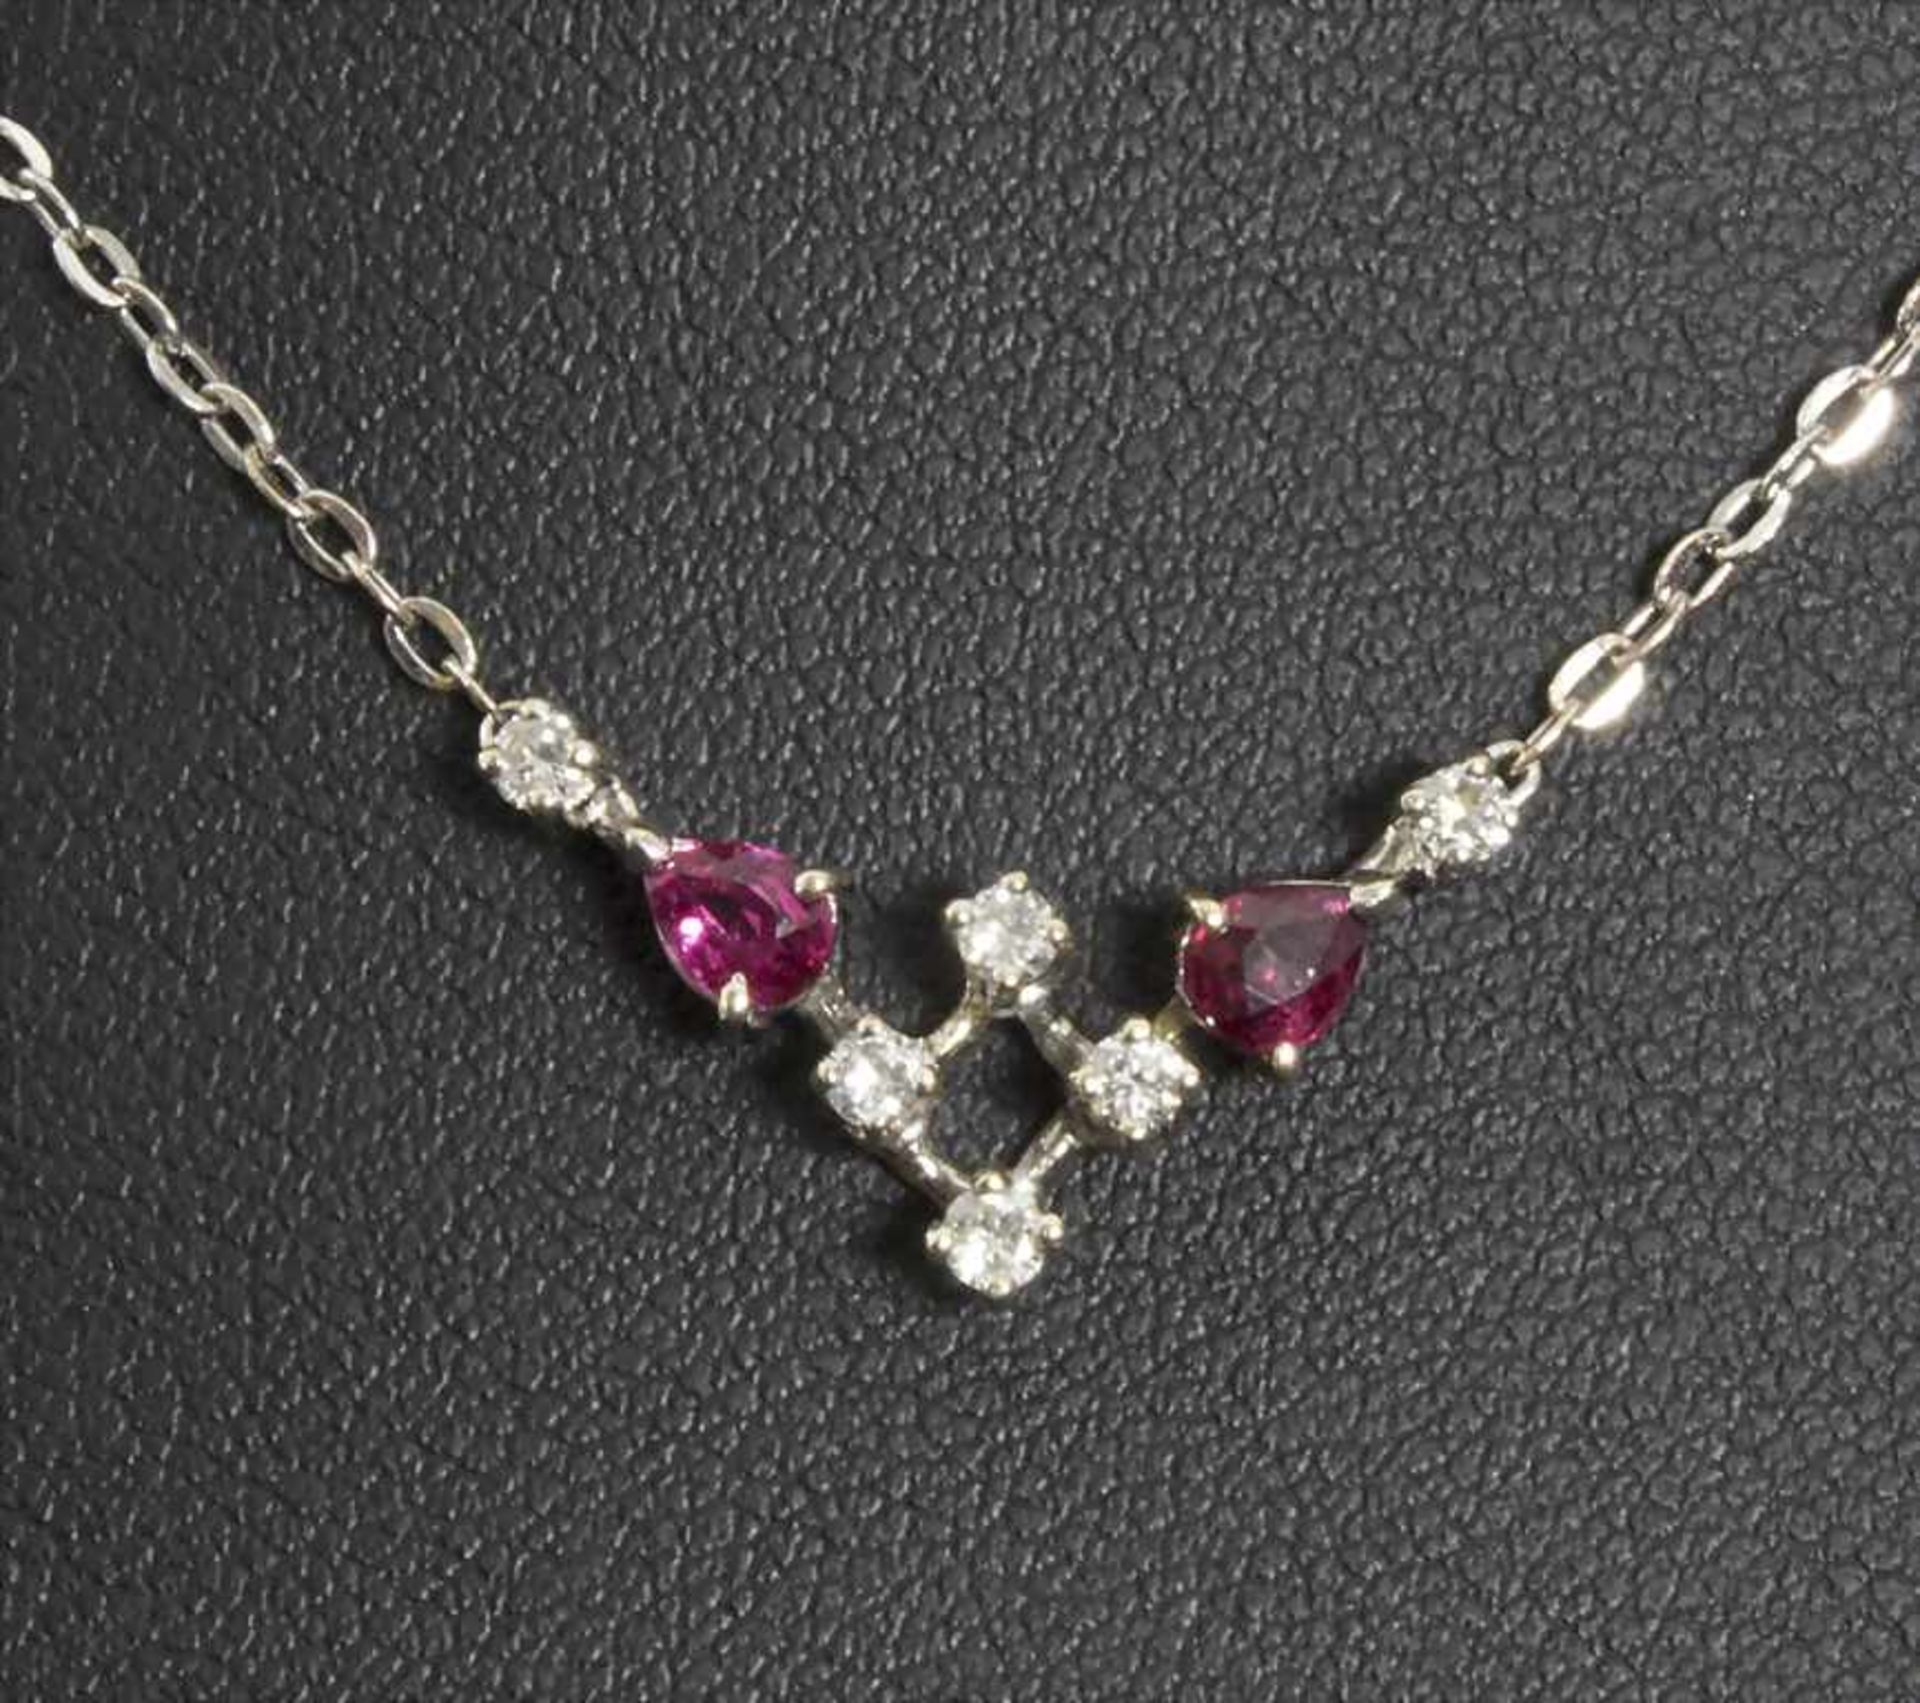 Collier mit Brillant und Rubin / A Necklace with brilliant and ruby